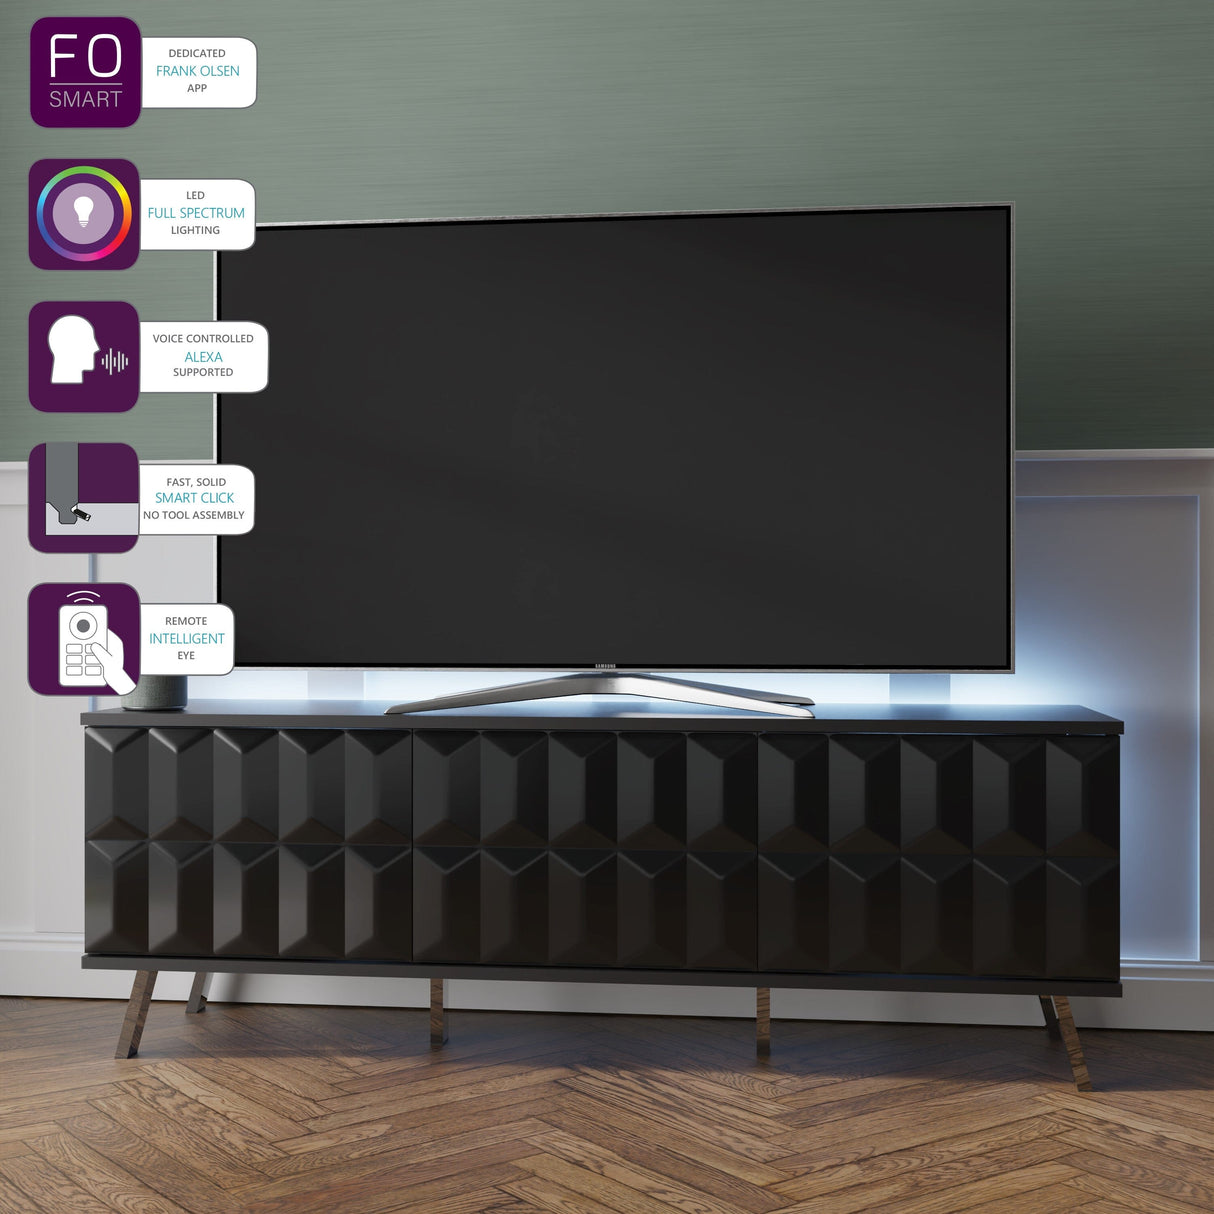 Frank Olsen Elevate Black TV Cabinet with Mood Lighting & Intelligent Eye